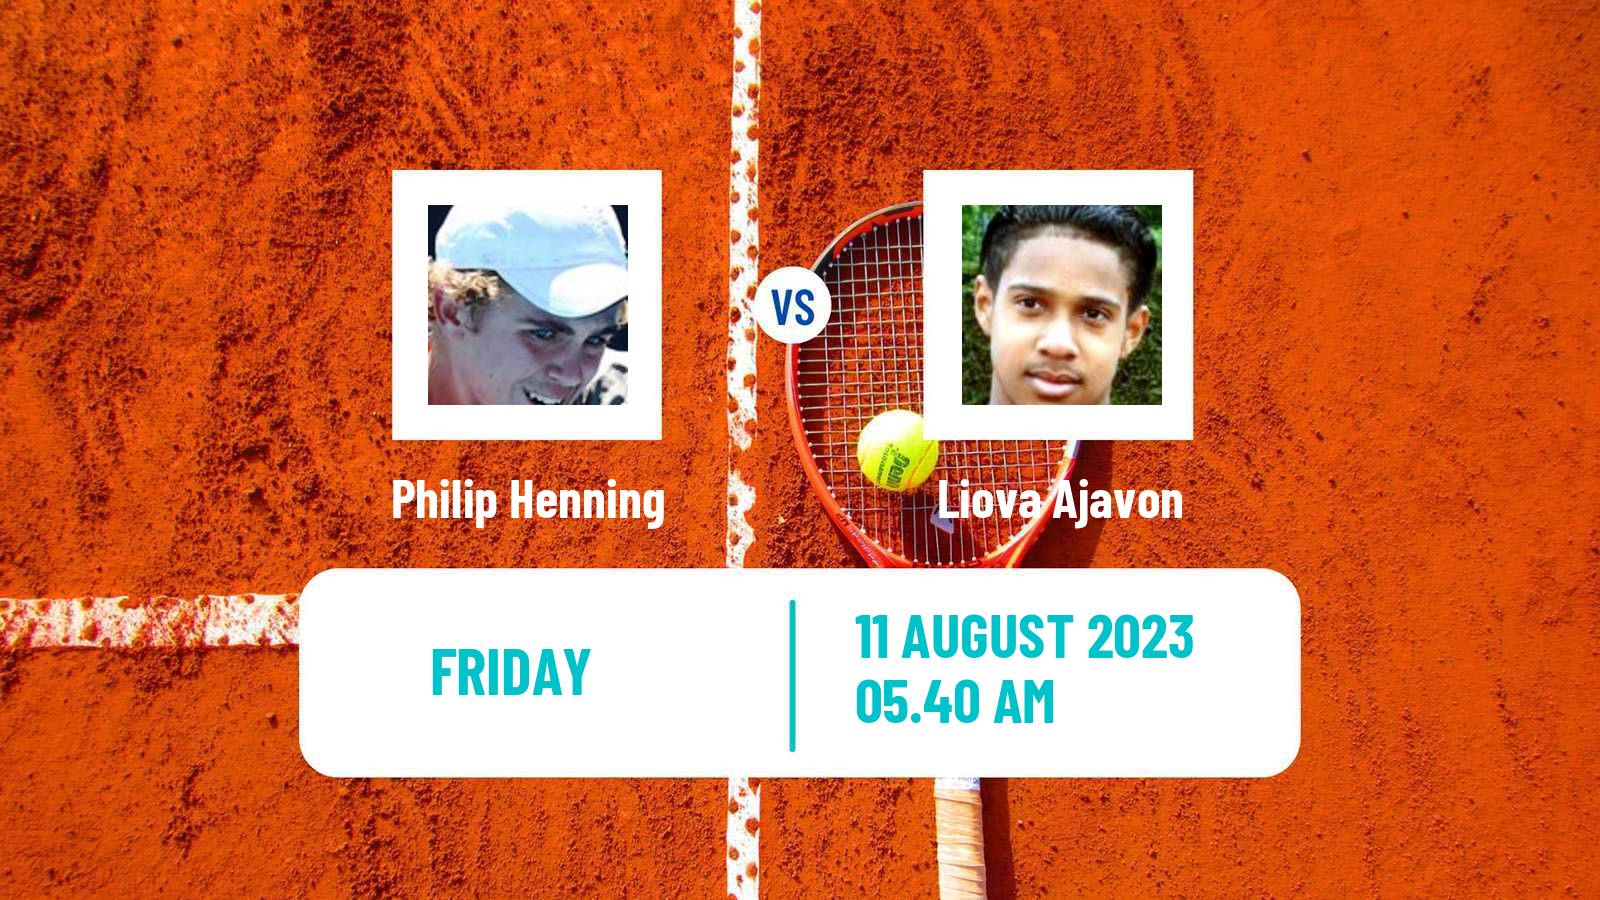 Tennis Davis Cup Group III Philip Henning - Liova Ajavon